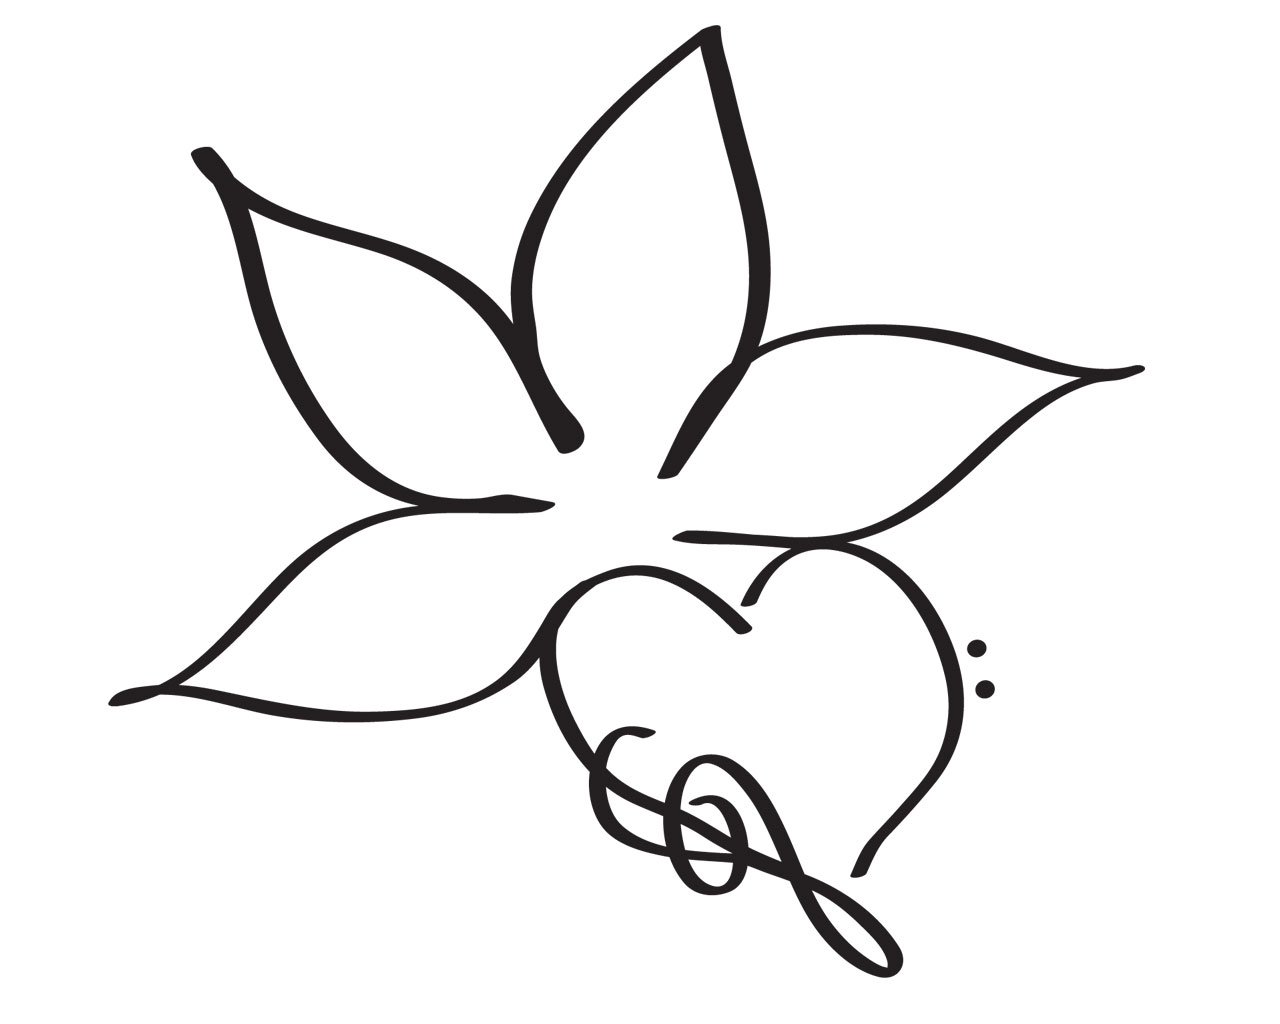 Free designs - Simple flower tattoo design wallpaper